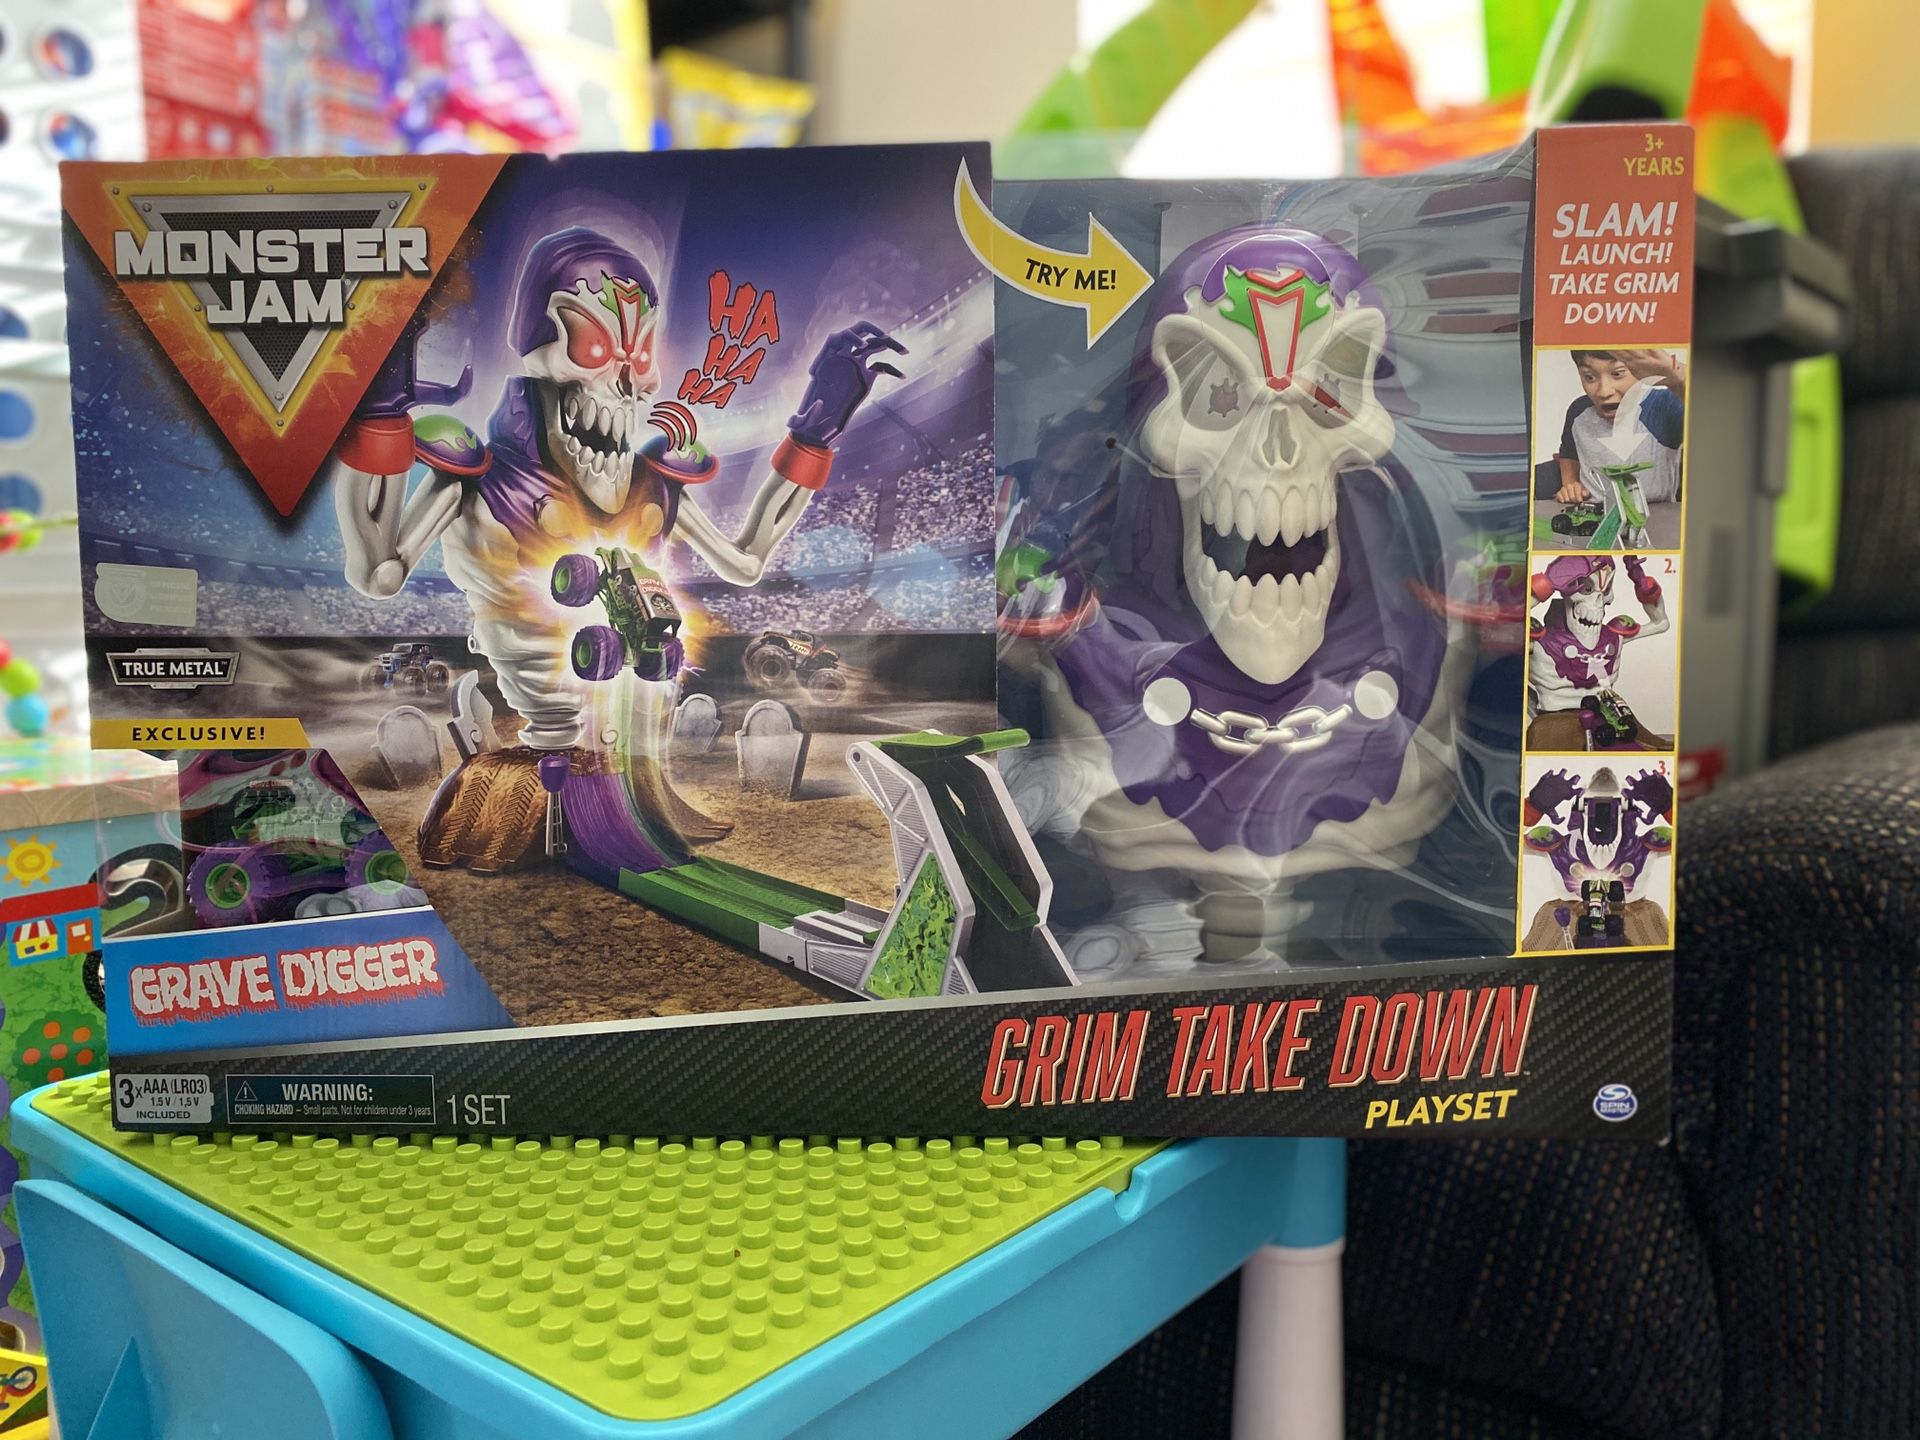 Monster Jam Grim Take Down Playset $35